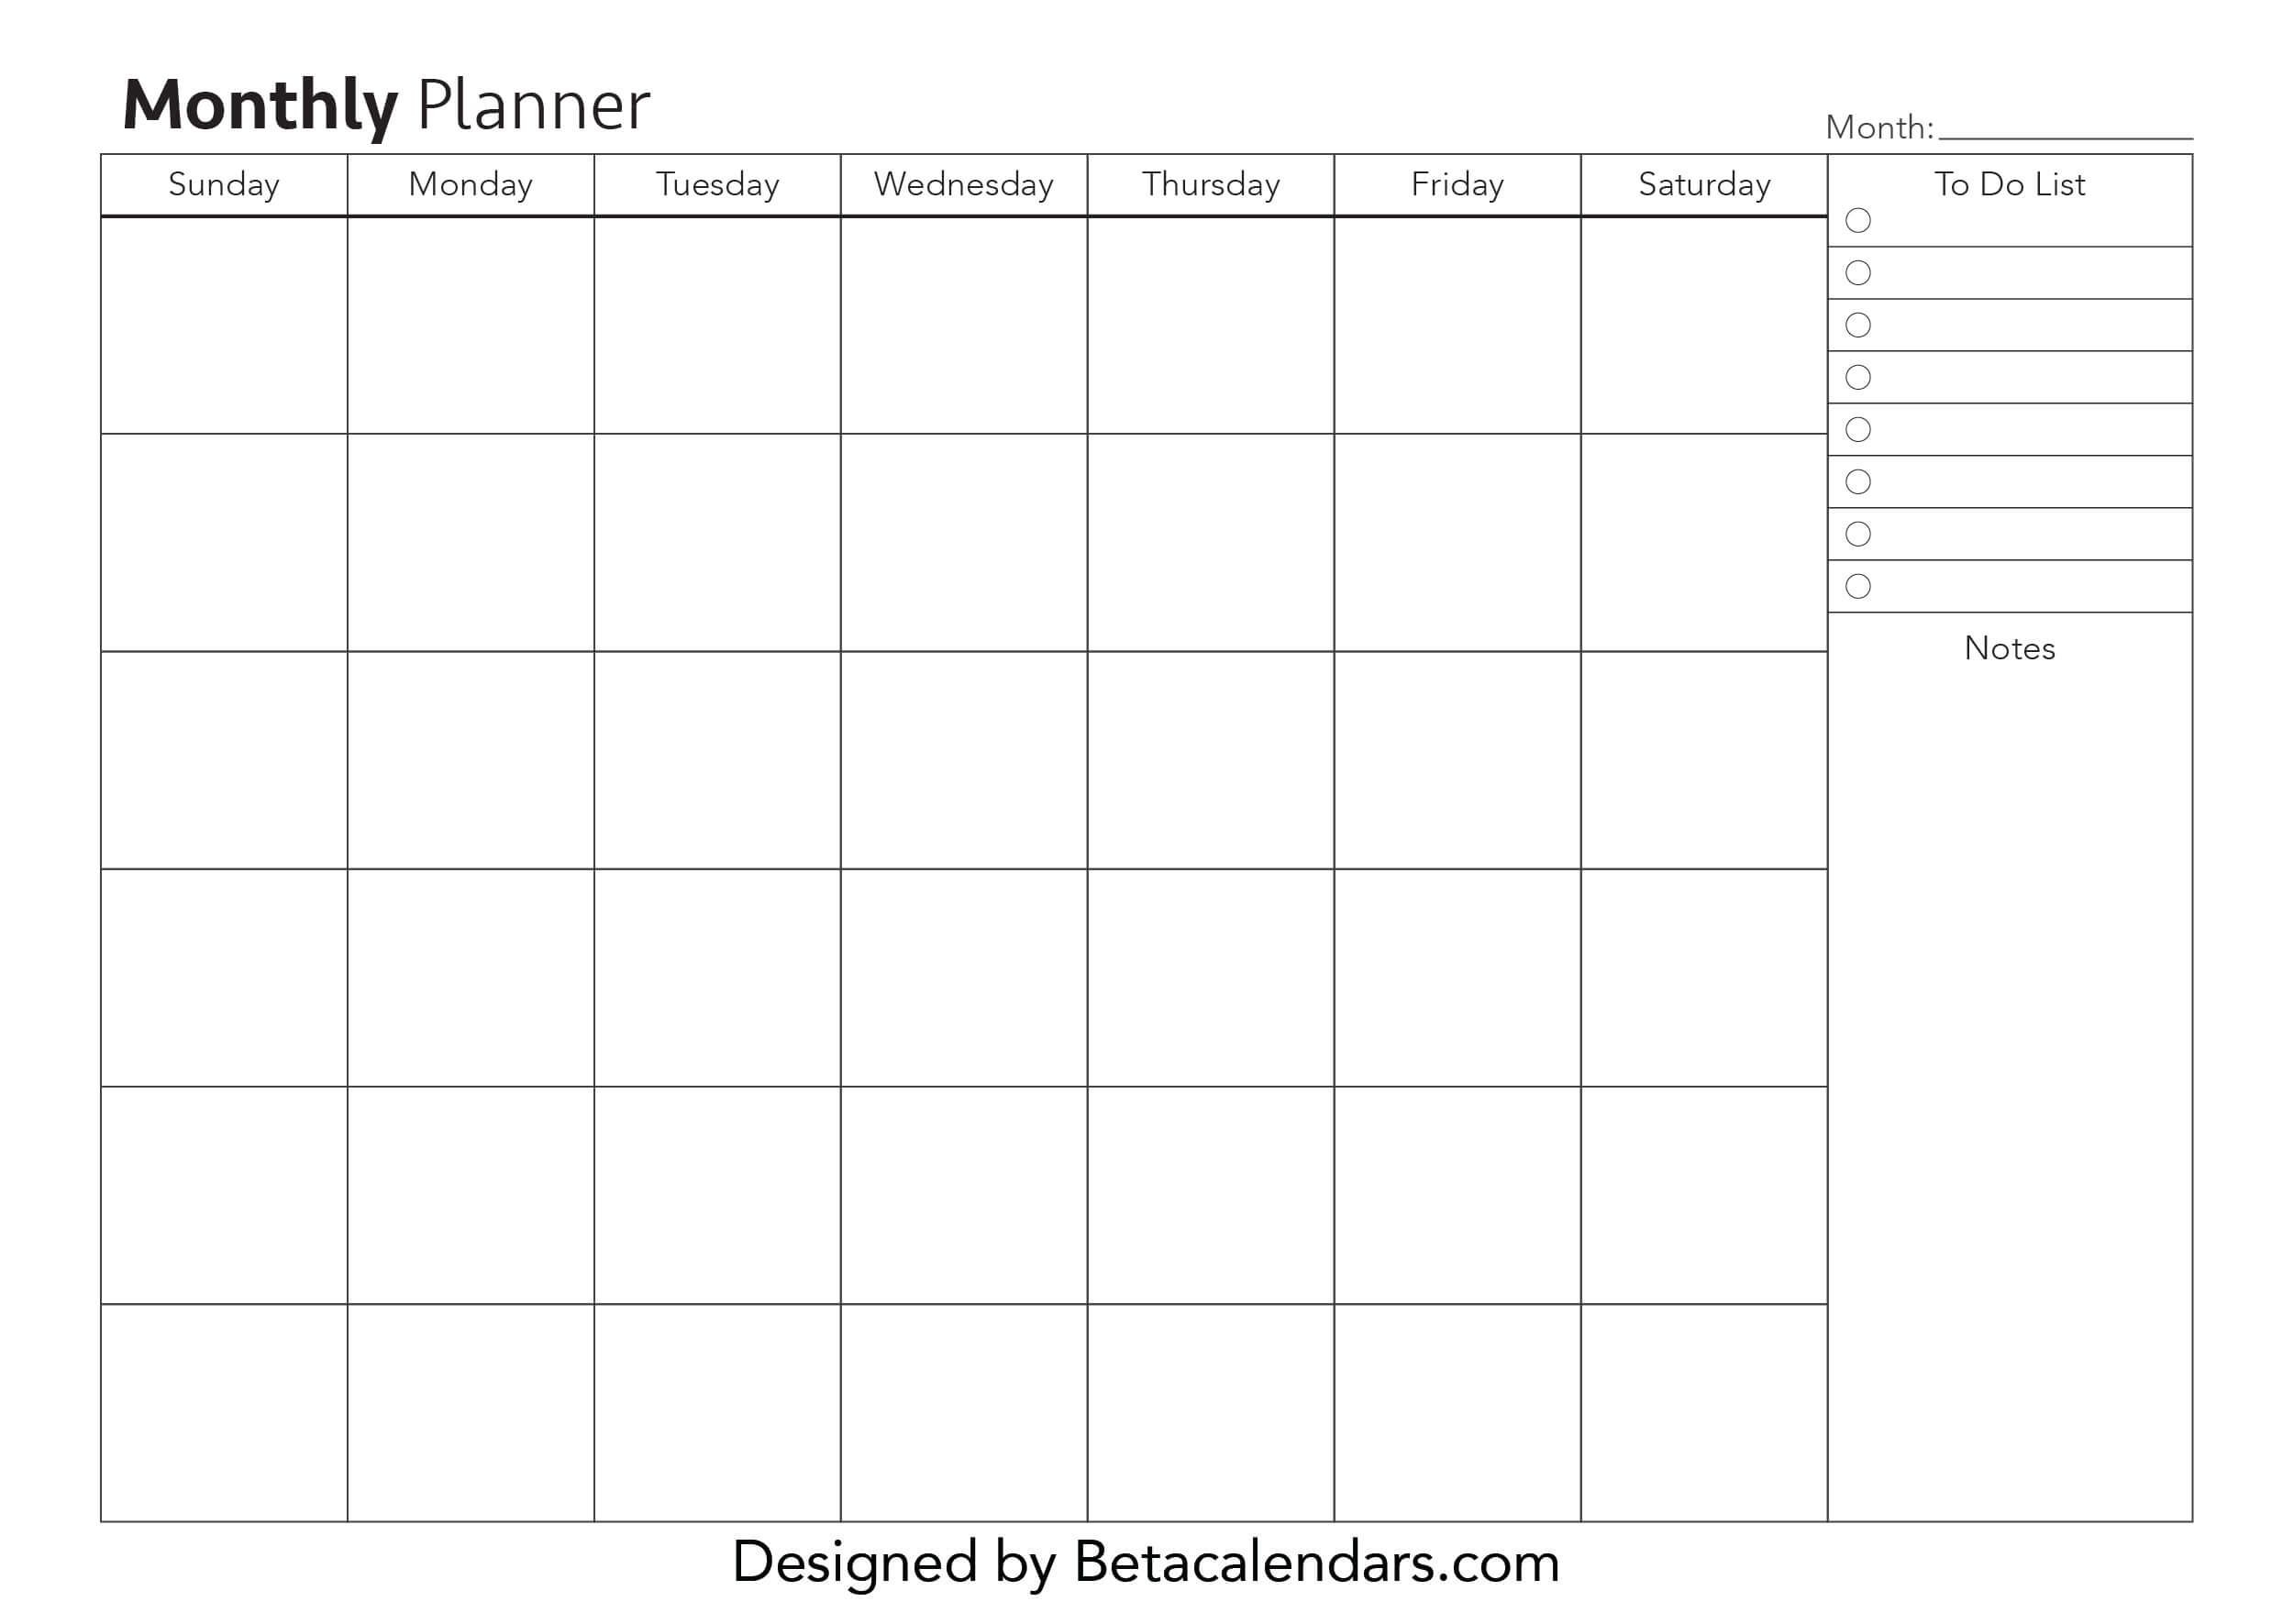 free printable monthly planner beta calendars